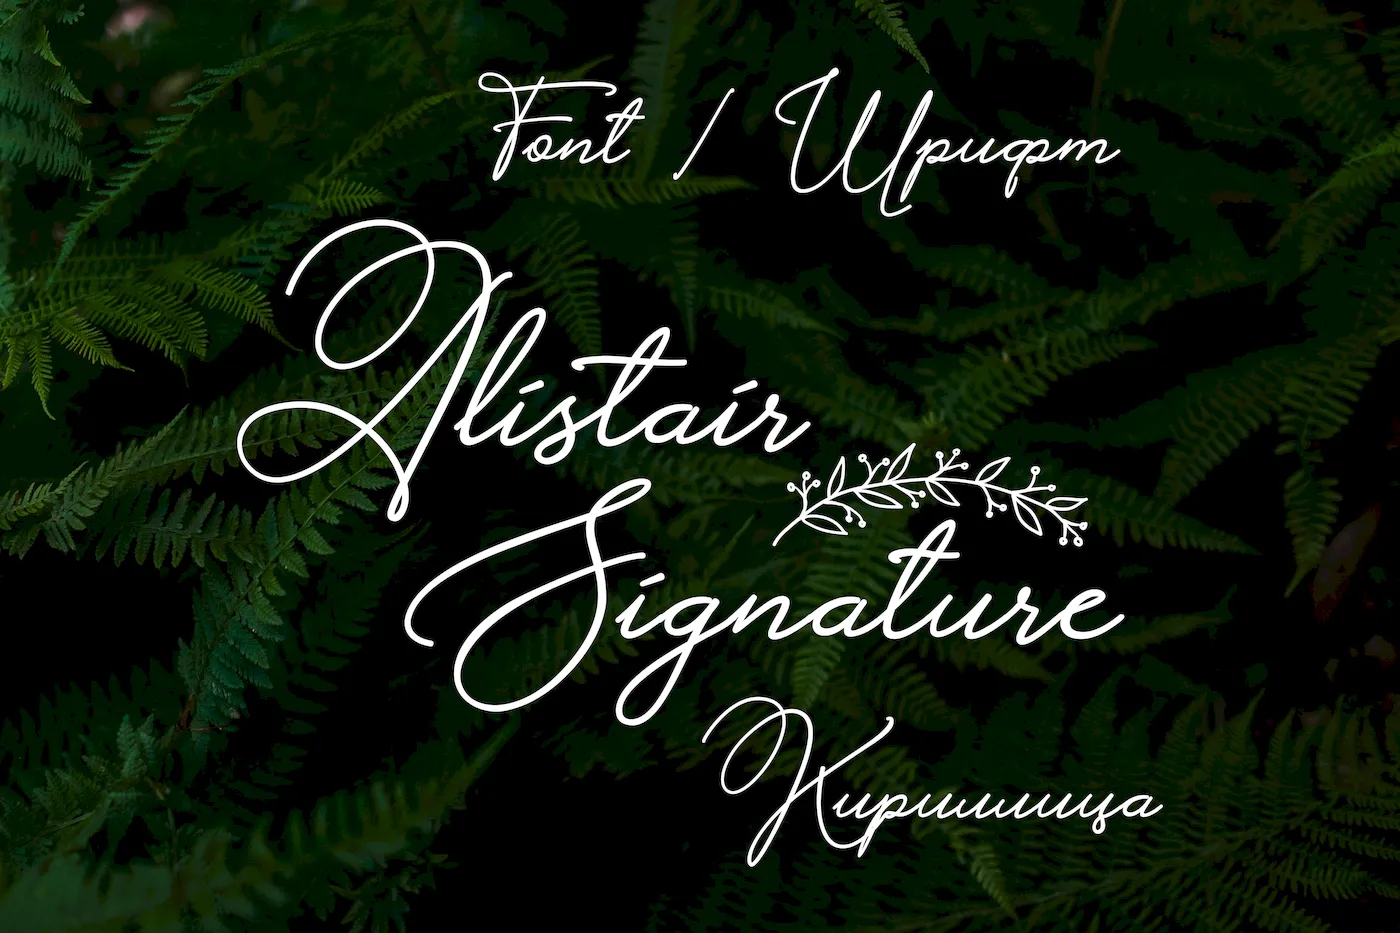 Шрифт Alistair Signature Cyrillic